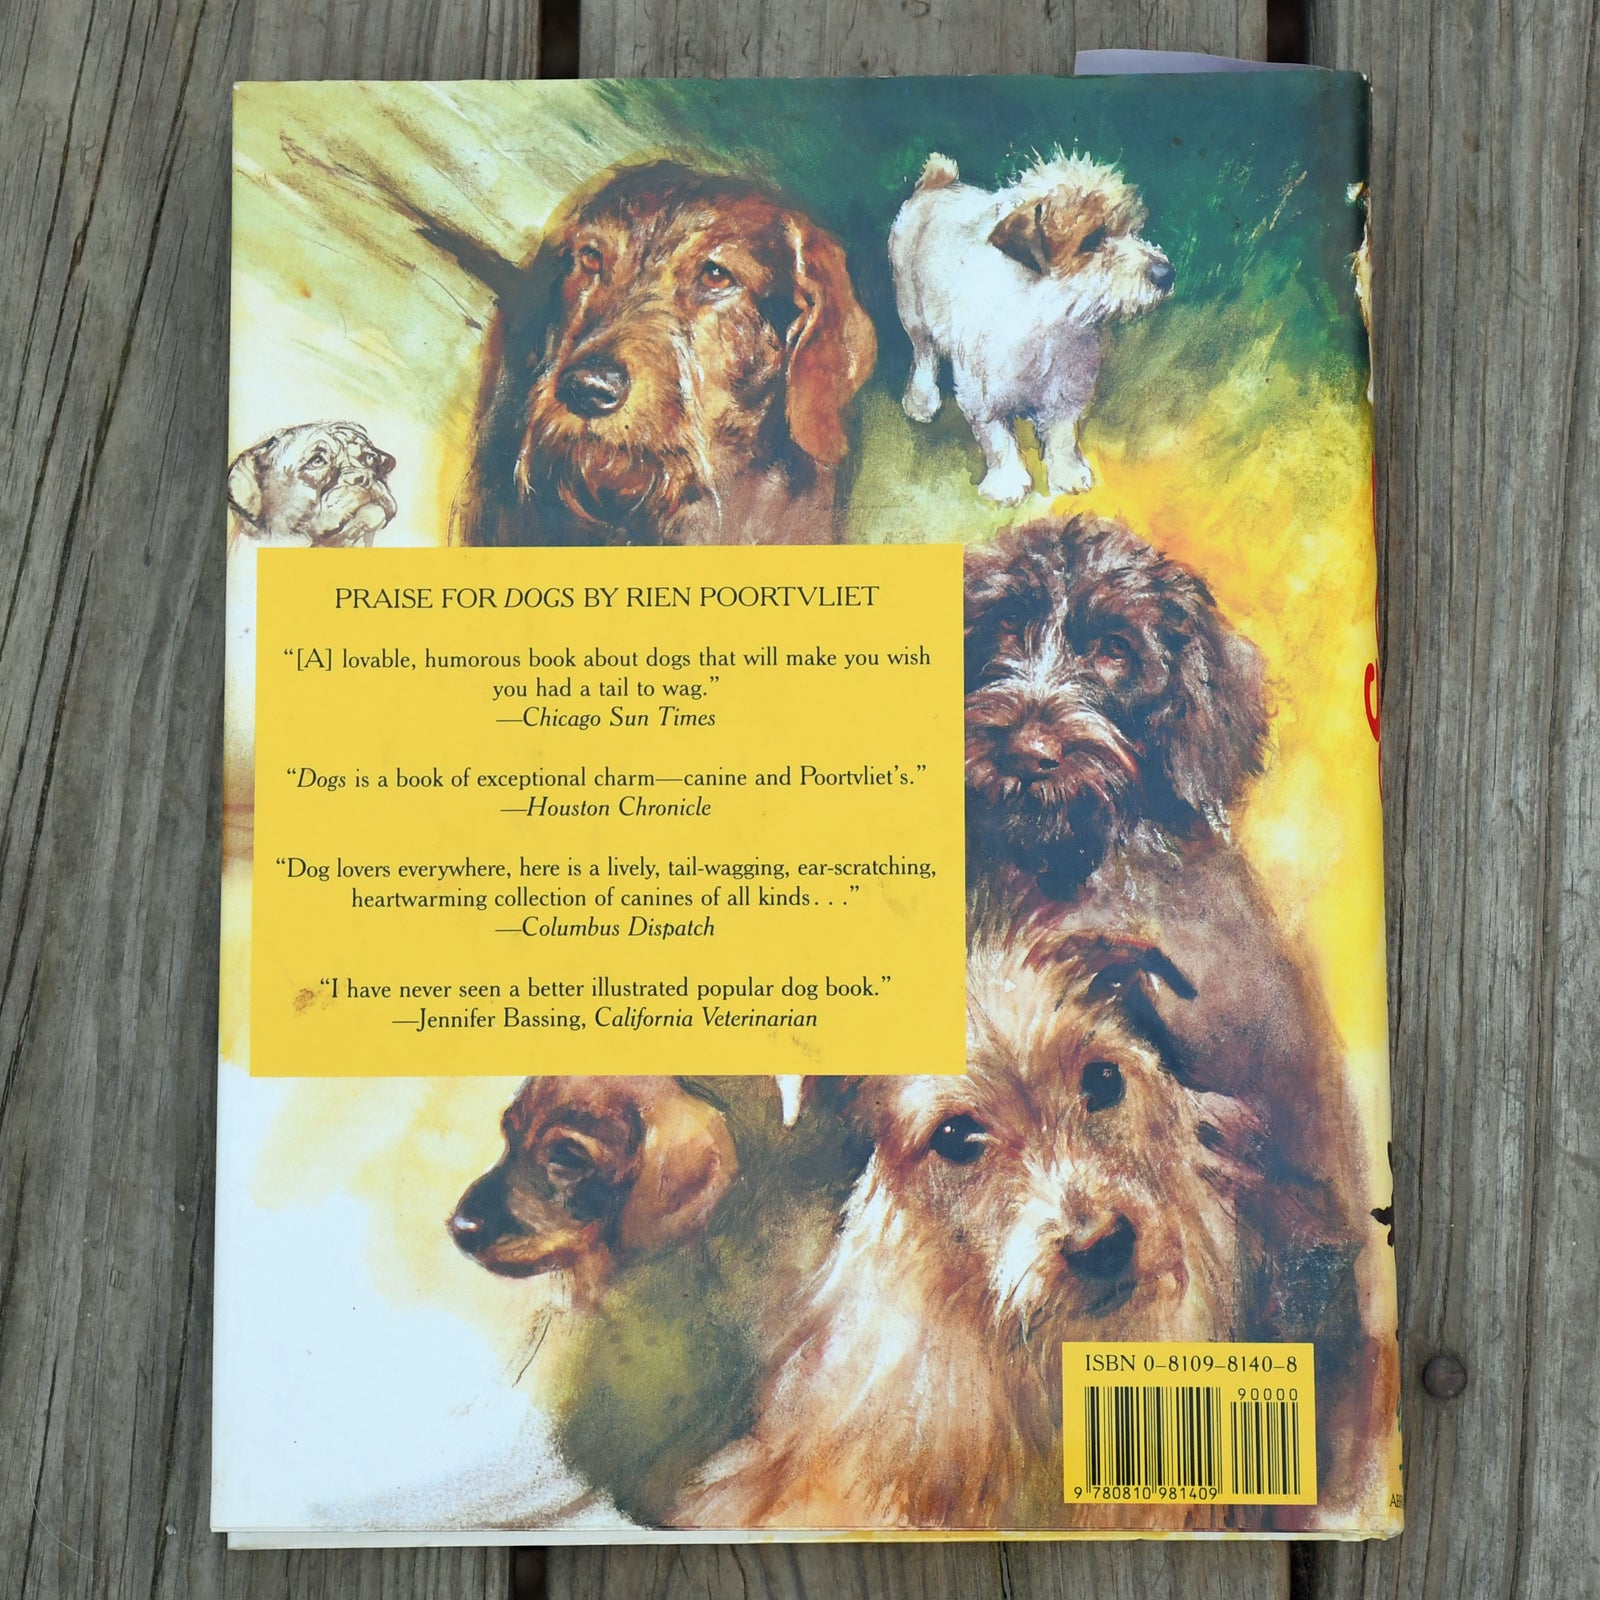 Dogs - Rien Poortvliet, 1996 edition, hardcover